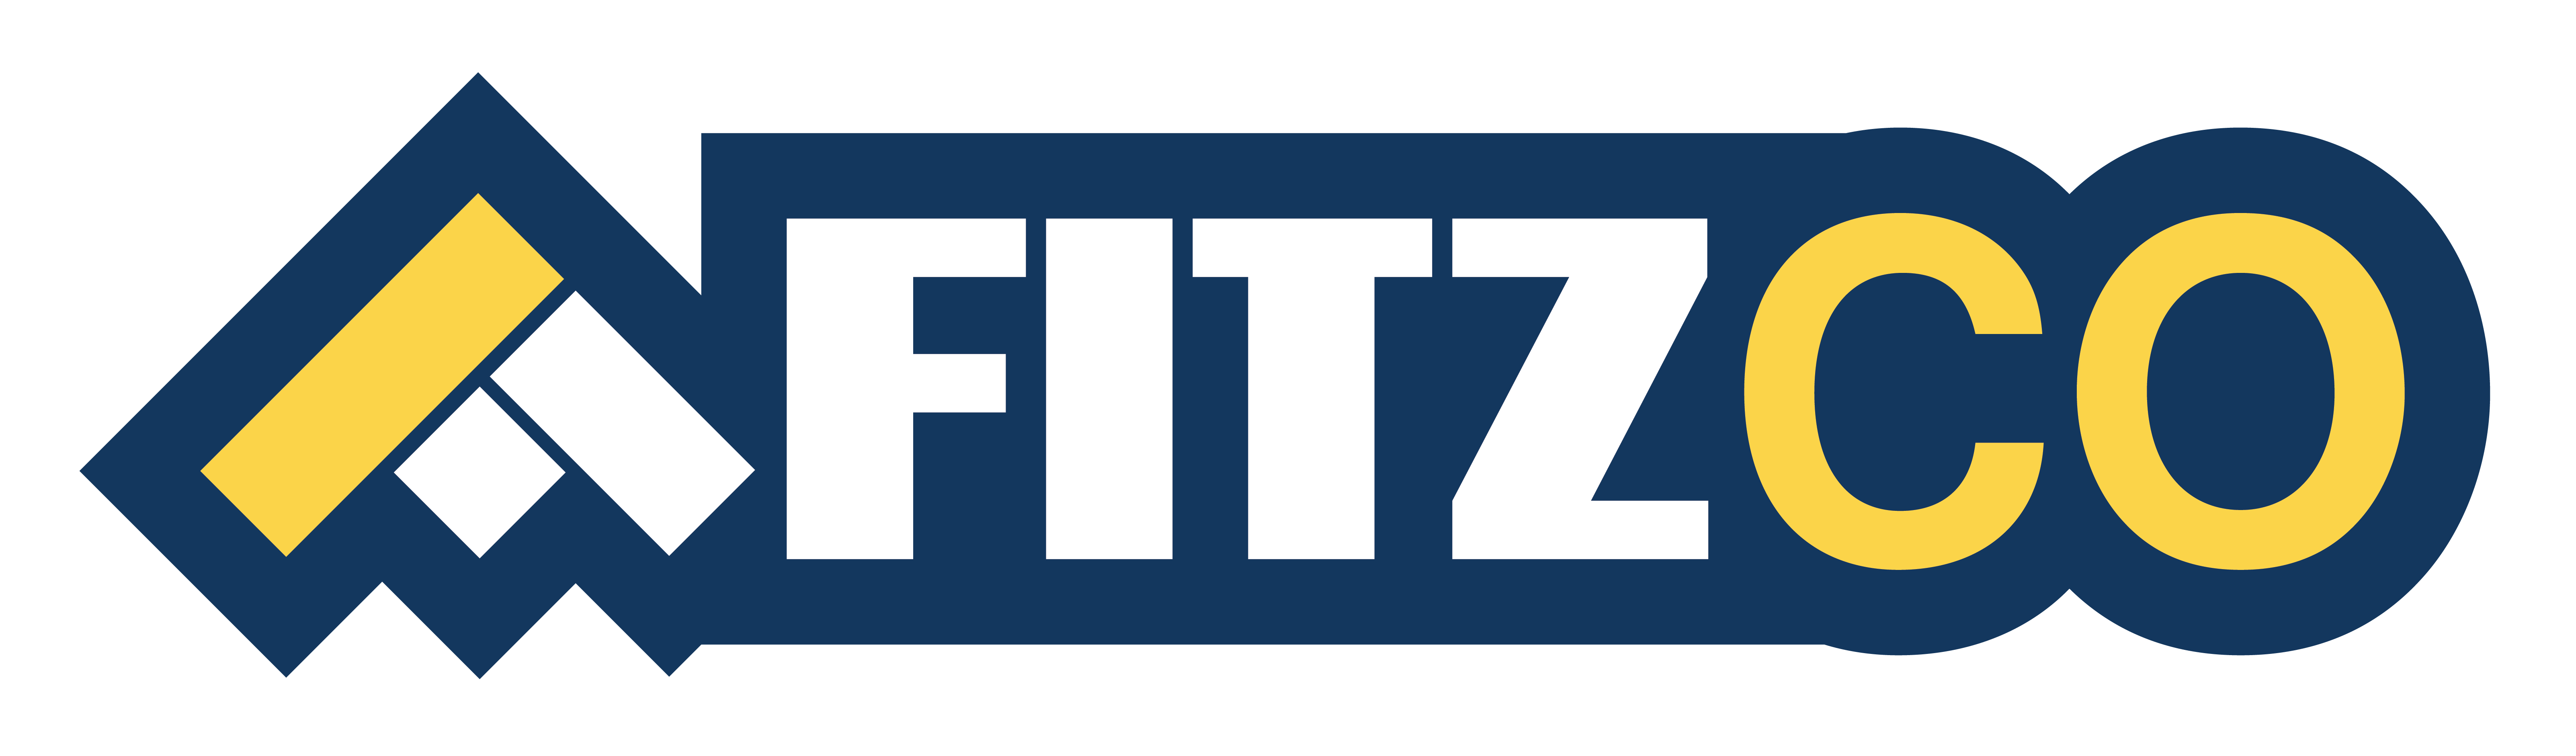 FITZCO Logo Vector NEW-02